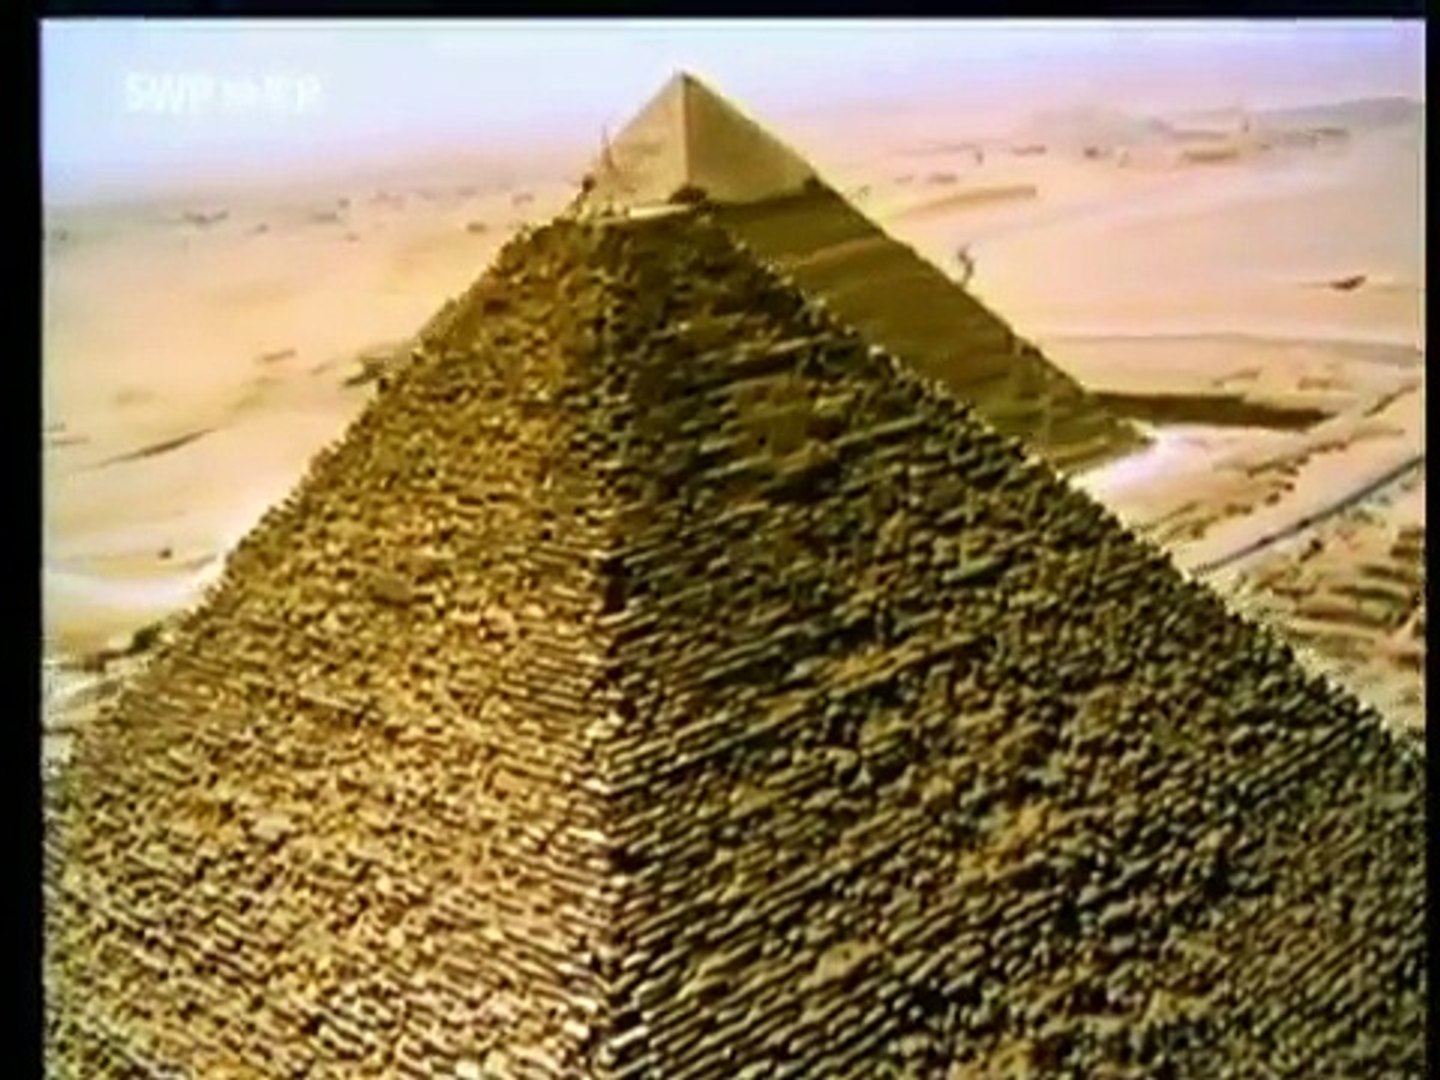 66 Les pyramides